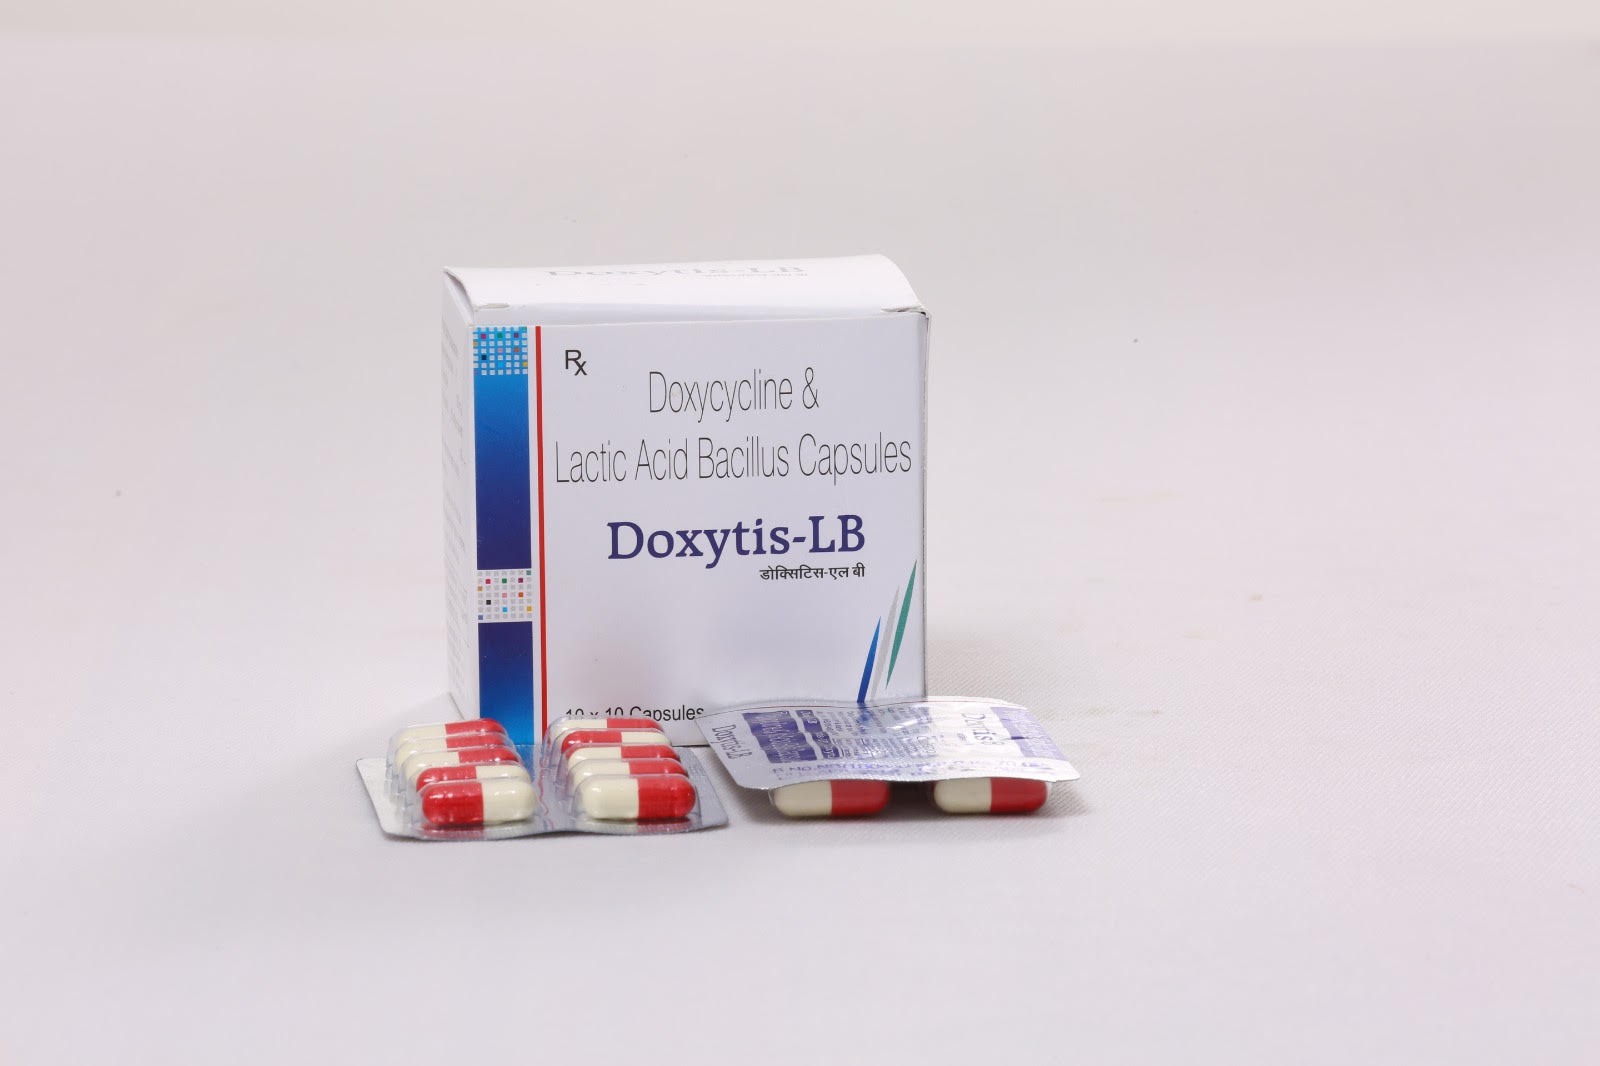 DOXYTIS-LB (Doxycycline Lactic Acid Bacillus 60 million spores)